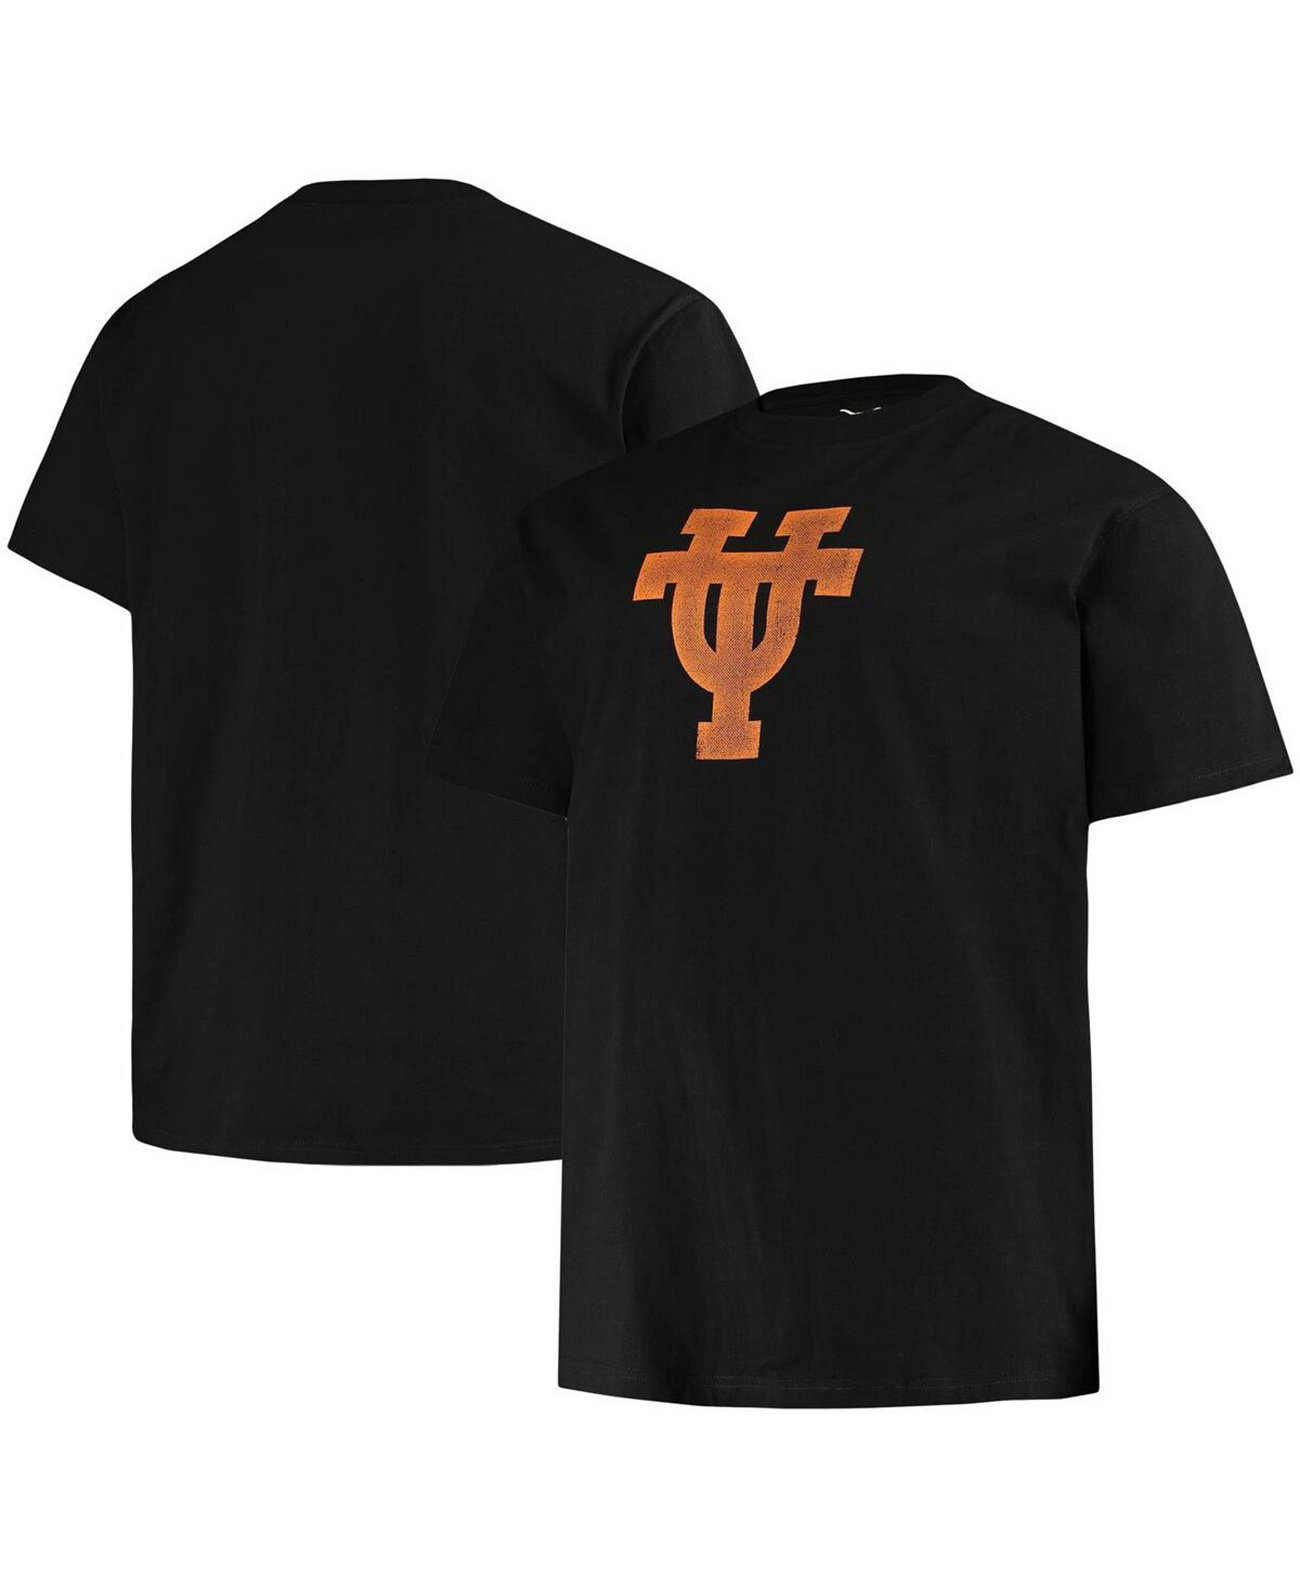 Мужская черная футболка Texas Longhorns Big and Tall Interlock с логотипом Profile